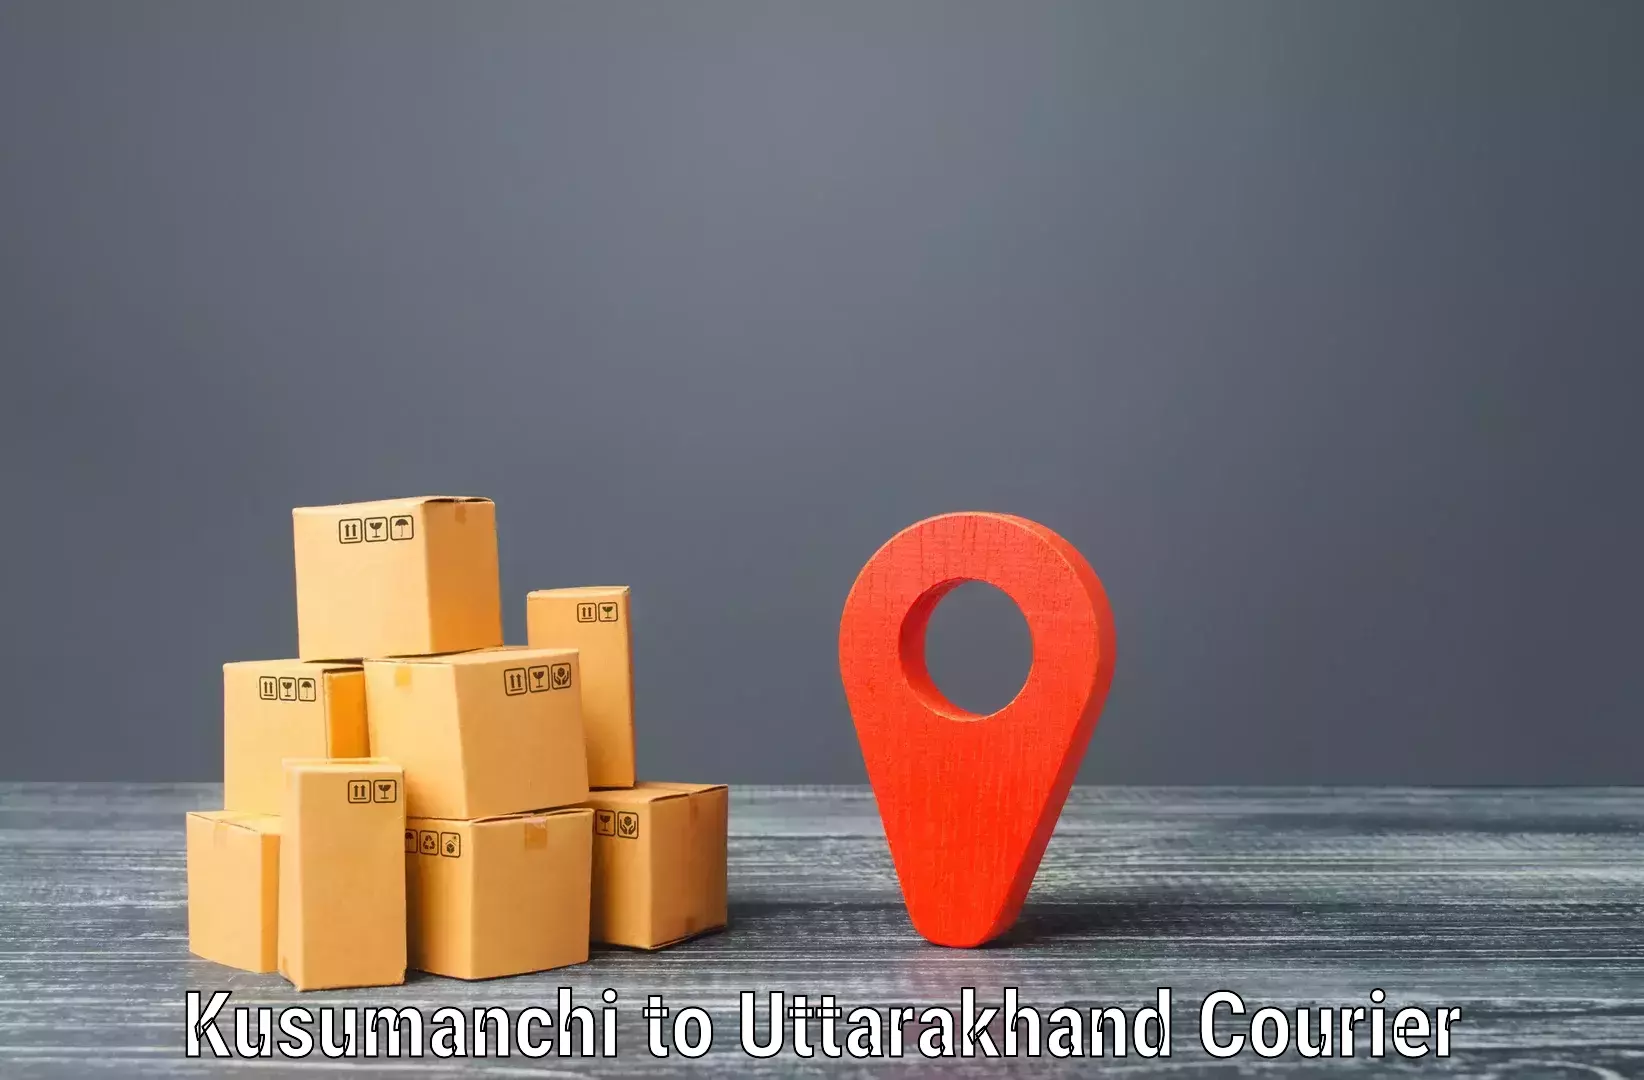 High-performance logistics Kusumanchi to Rishikesh